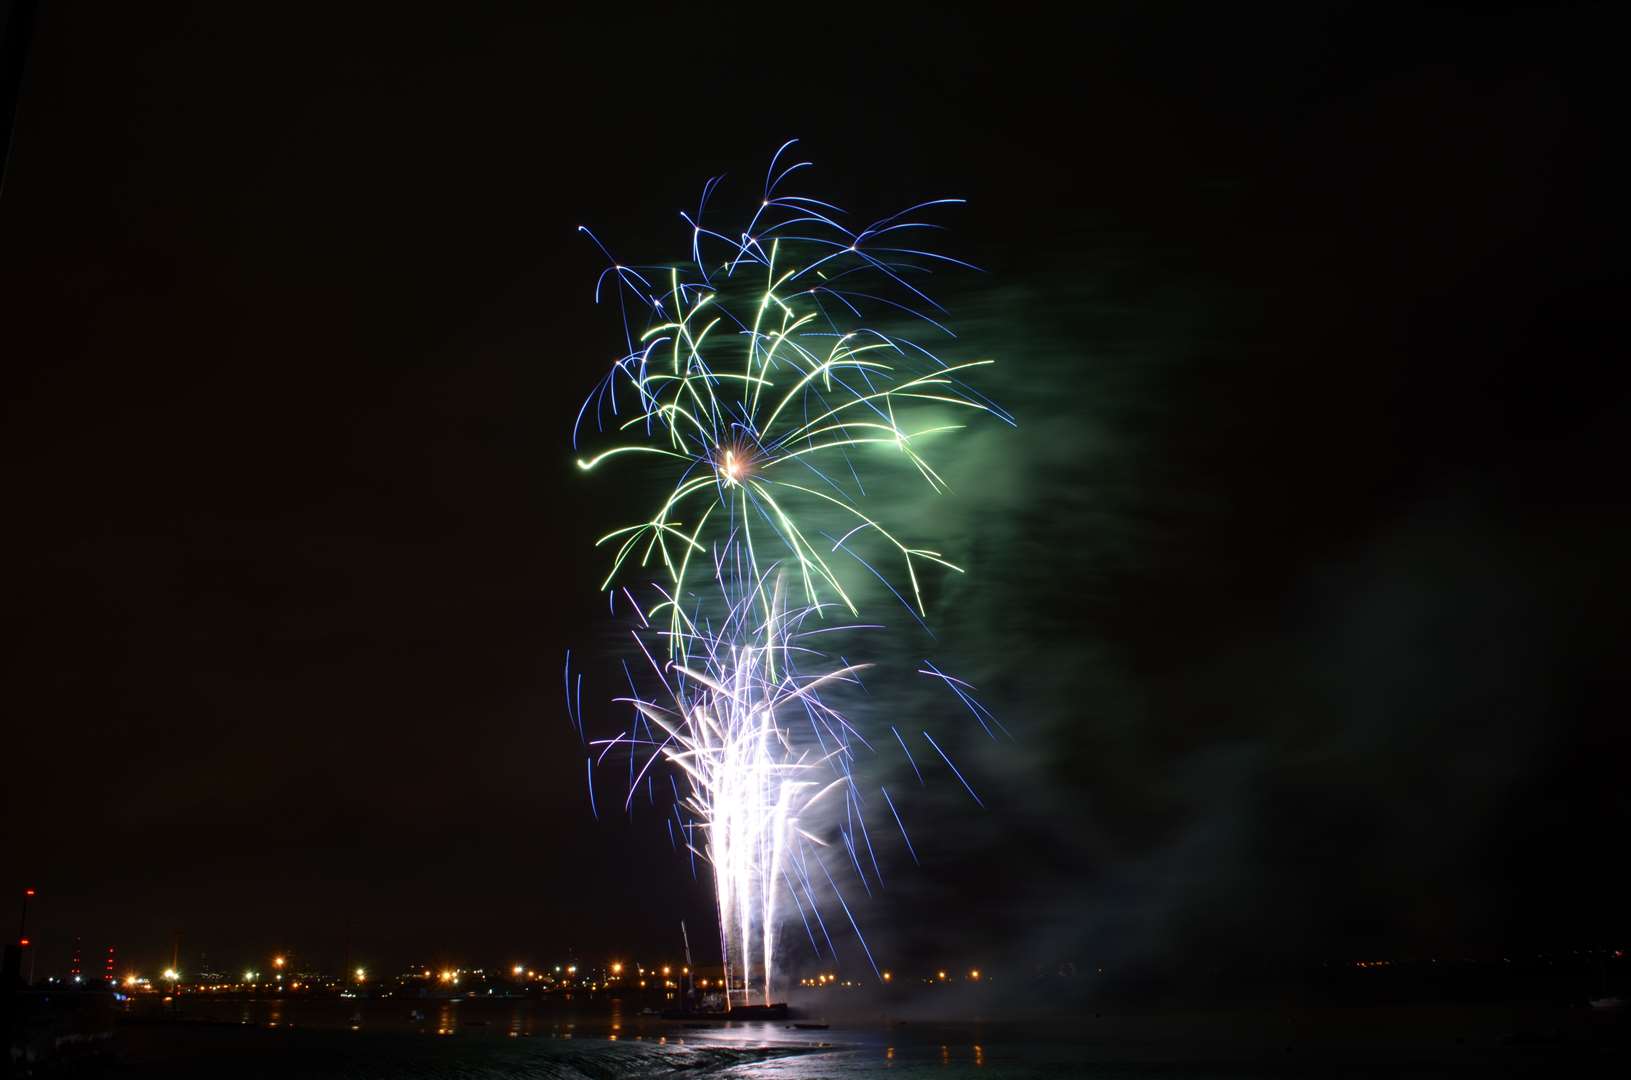 The Gravesend riverside fireworks show last year. Photo: Jason Arthur